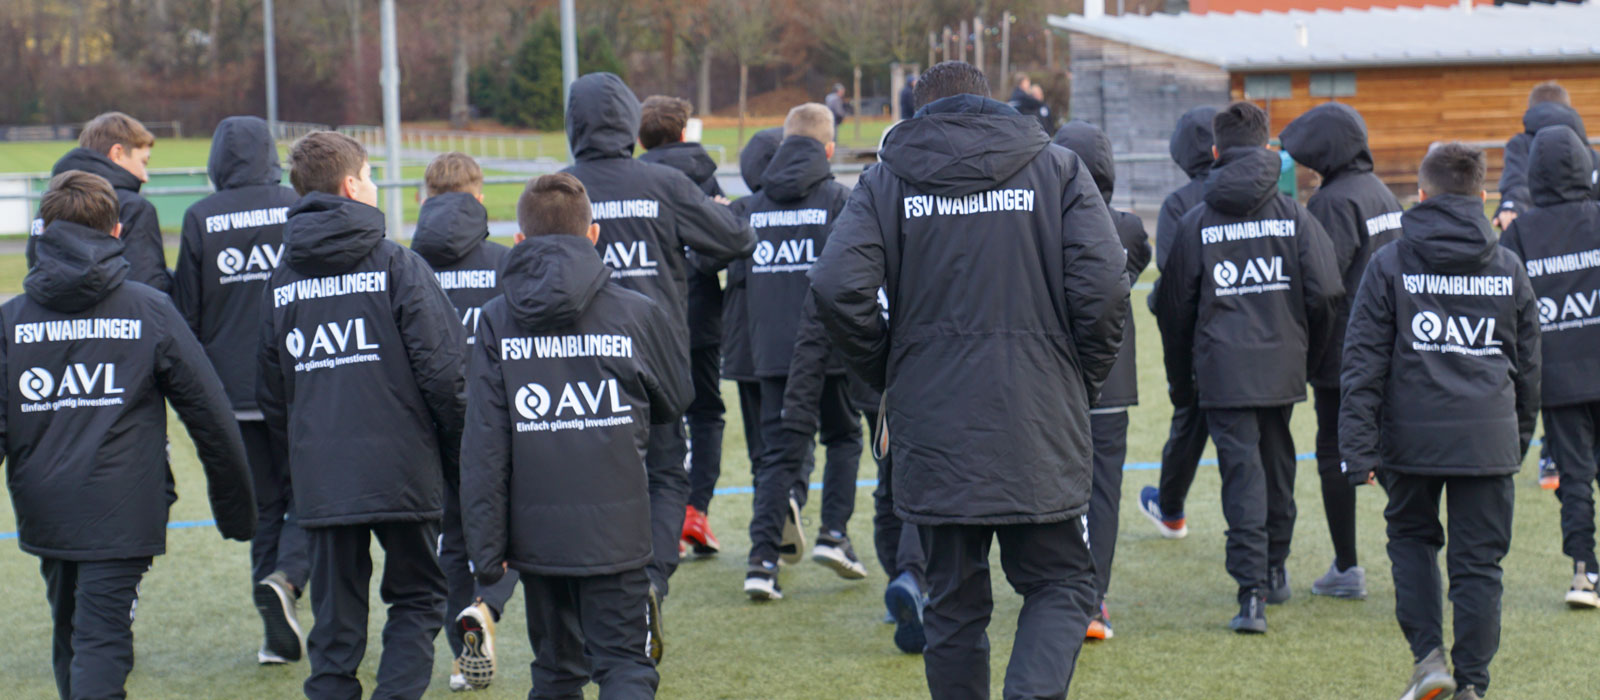 Mannschaft FSV Waiblingen verlässt das Spielfeld